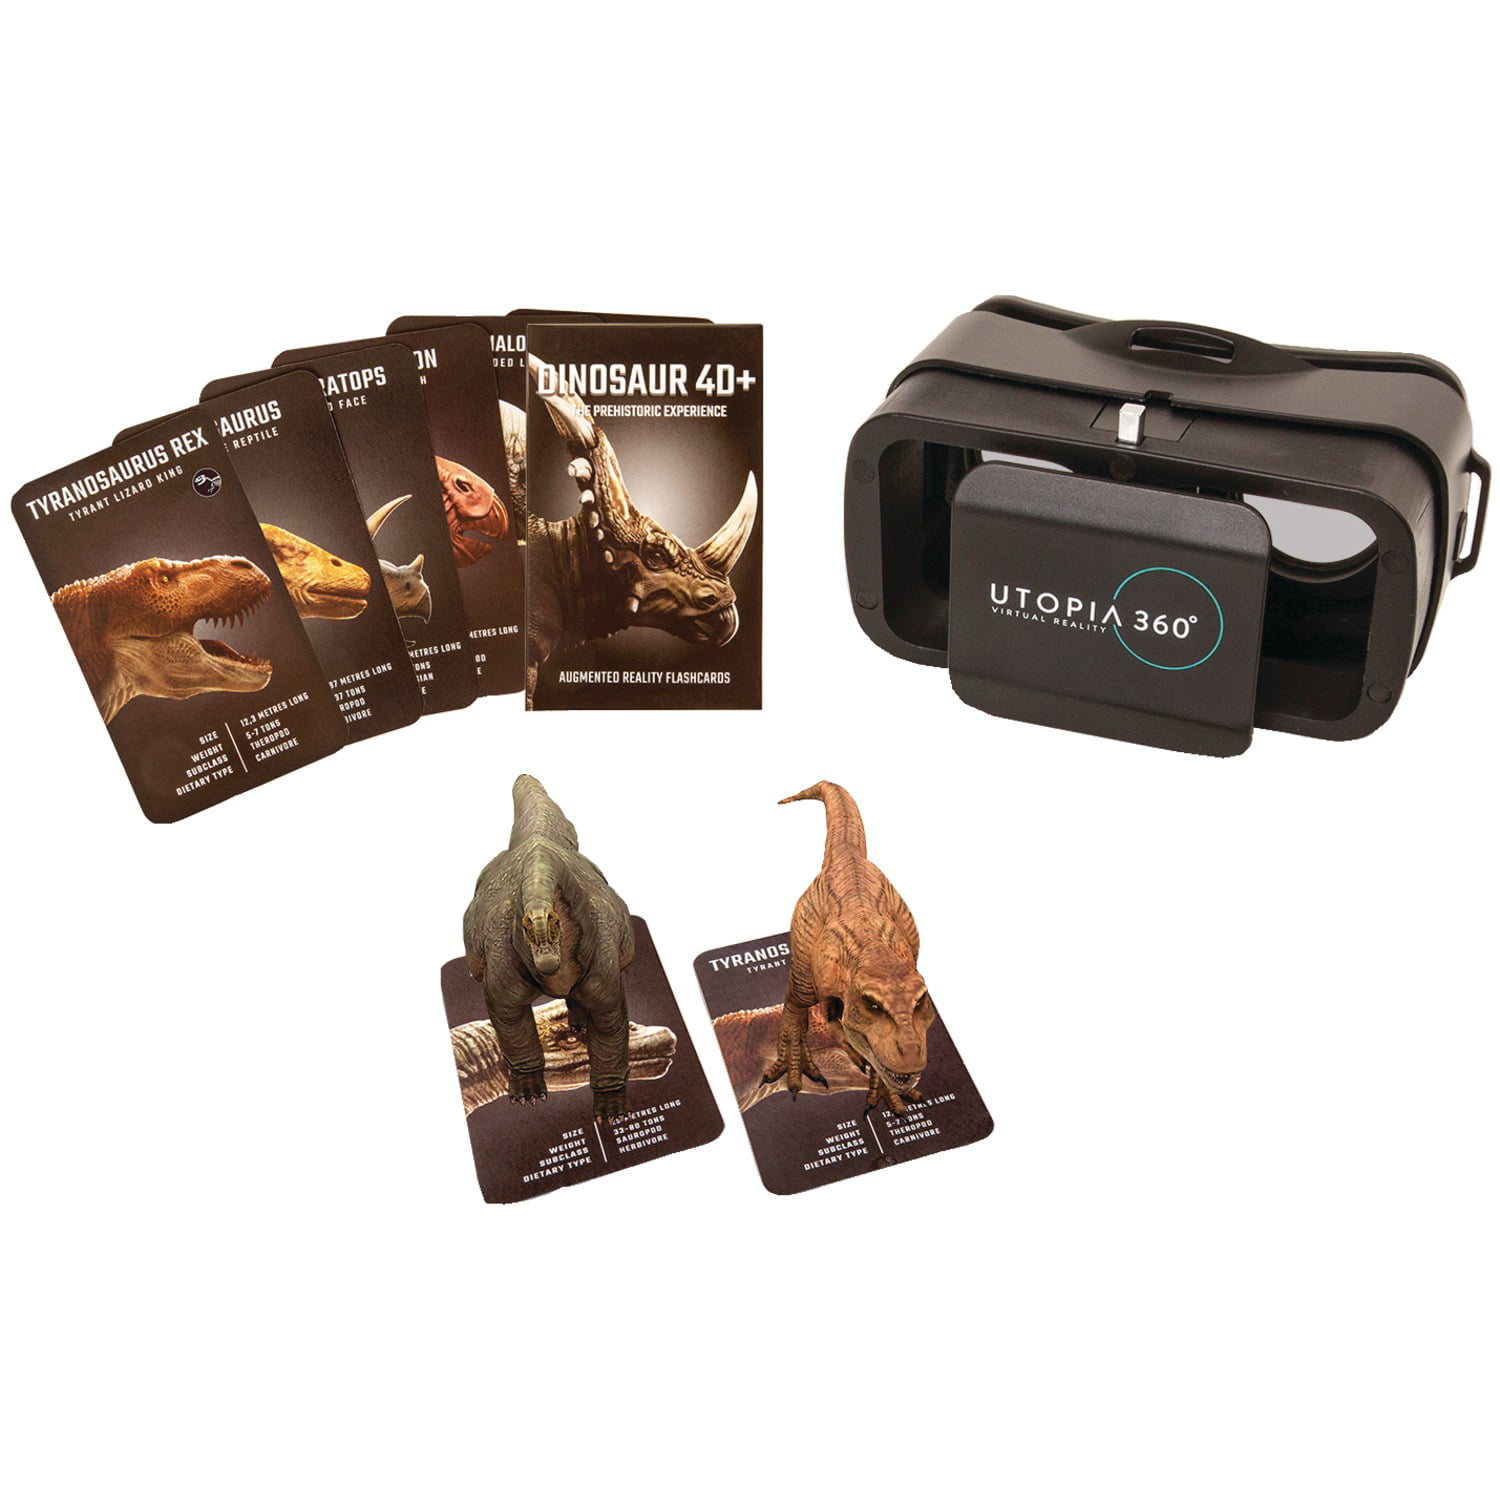 Retrak Etvrardino 4d Utopia 360 Vr Headset Dinosaur Augmented